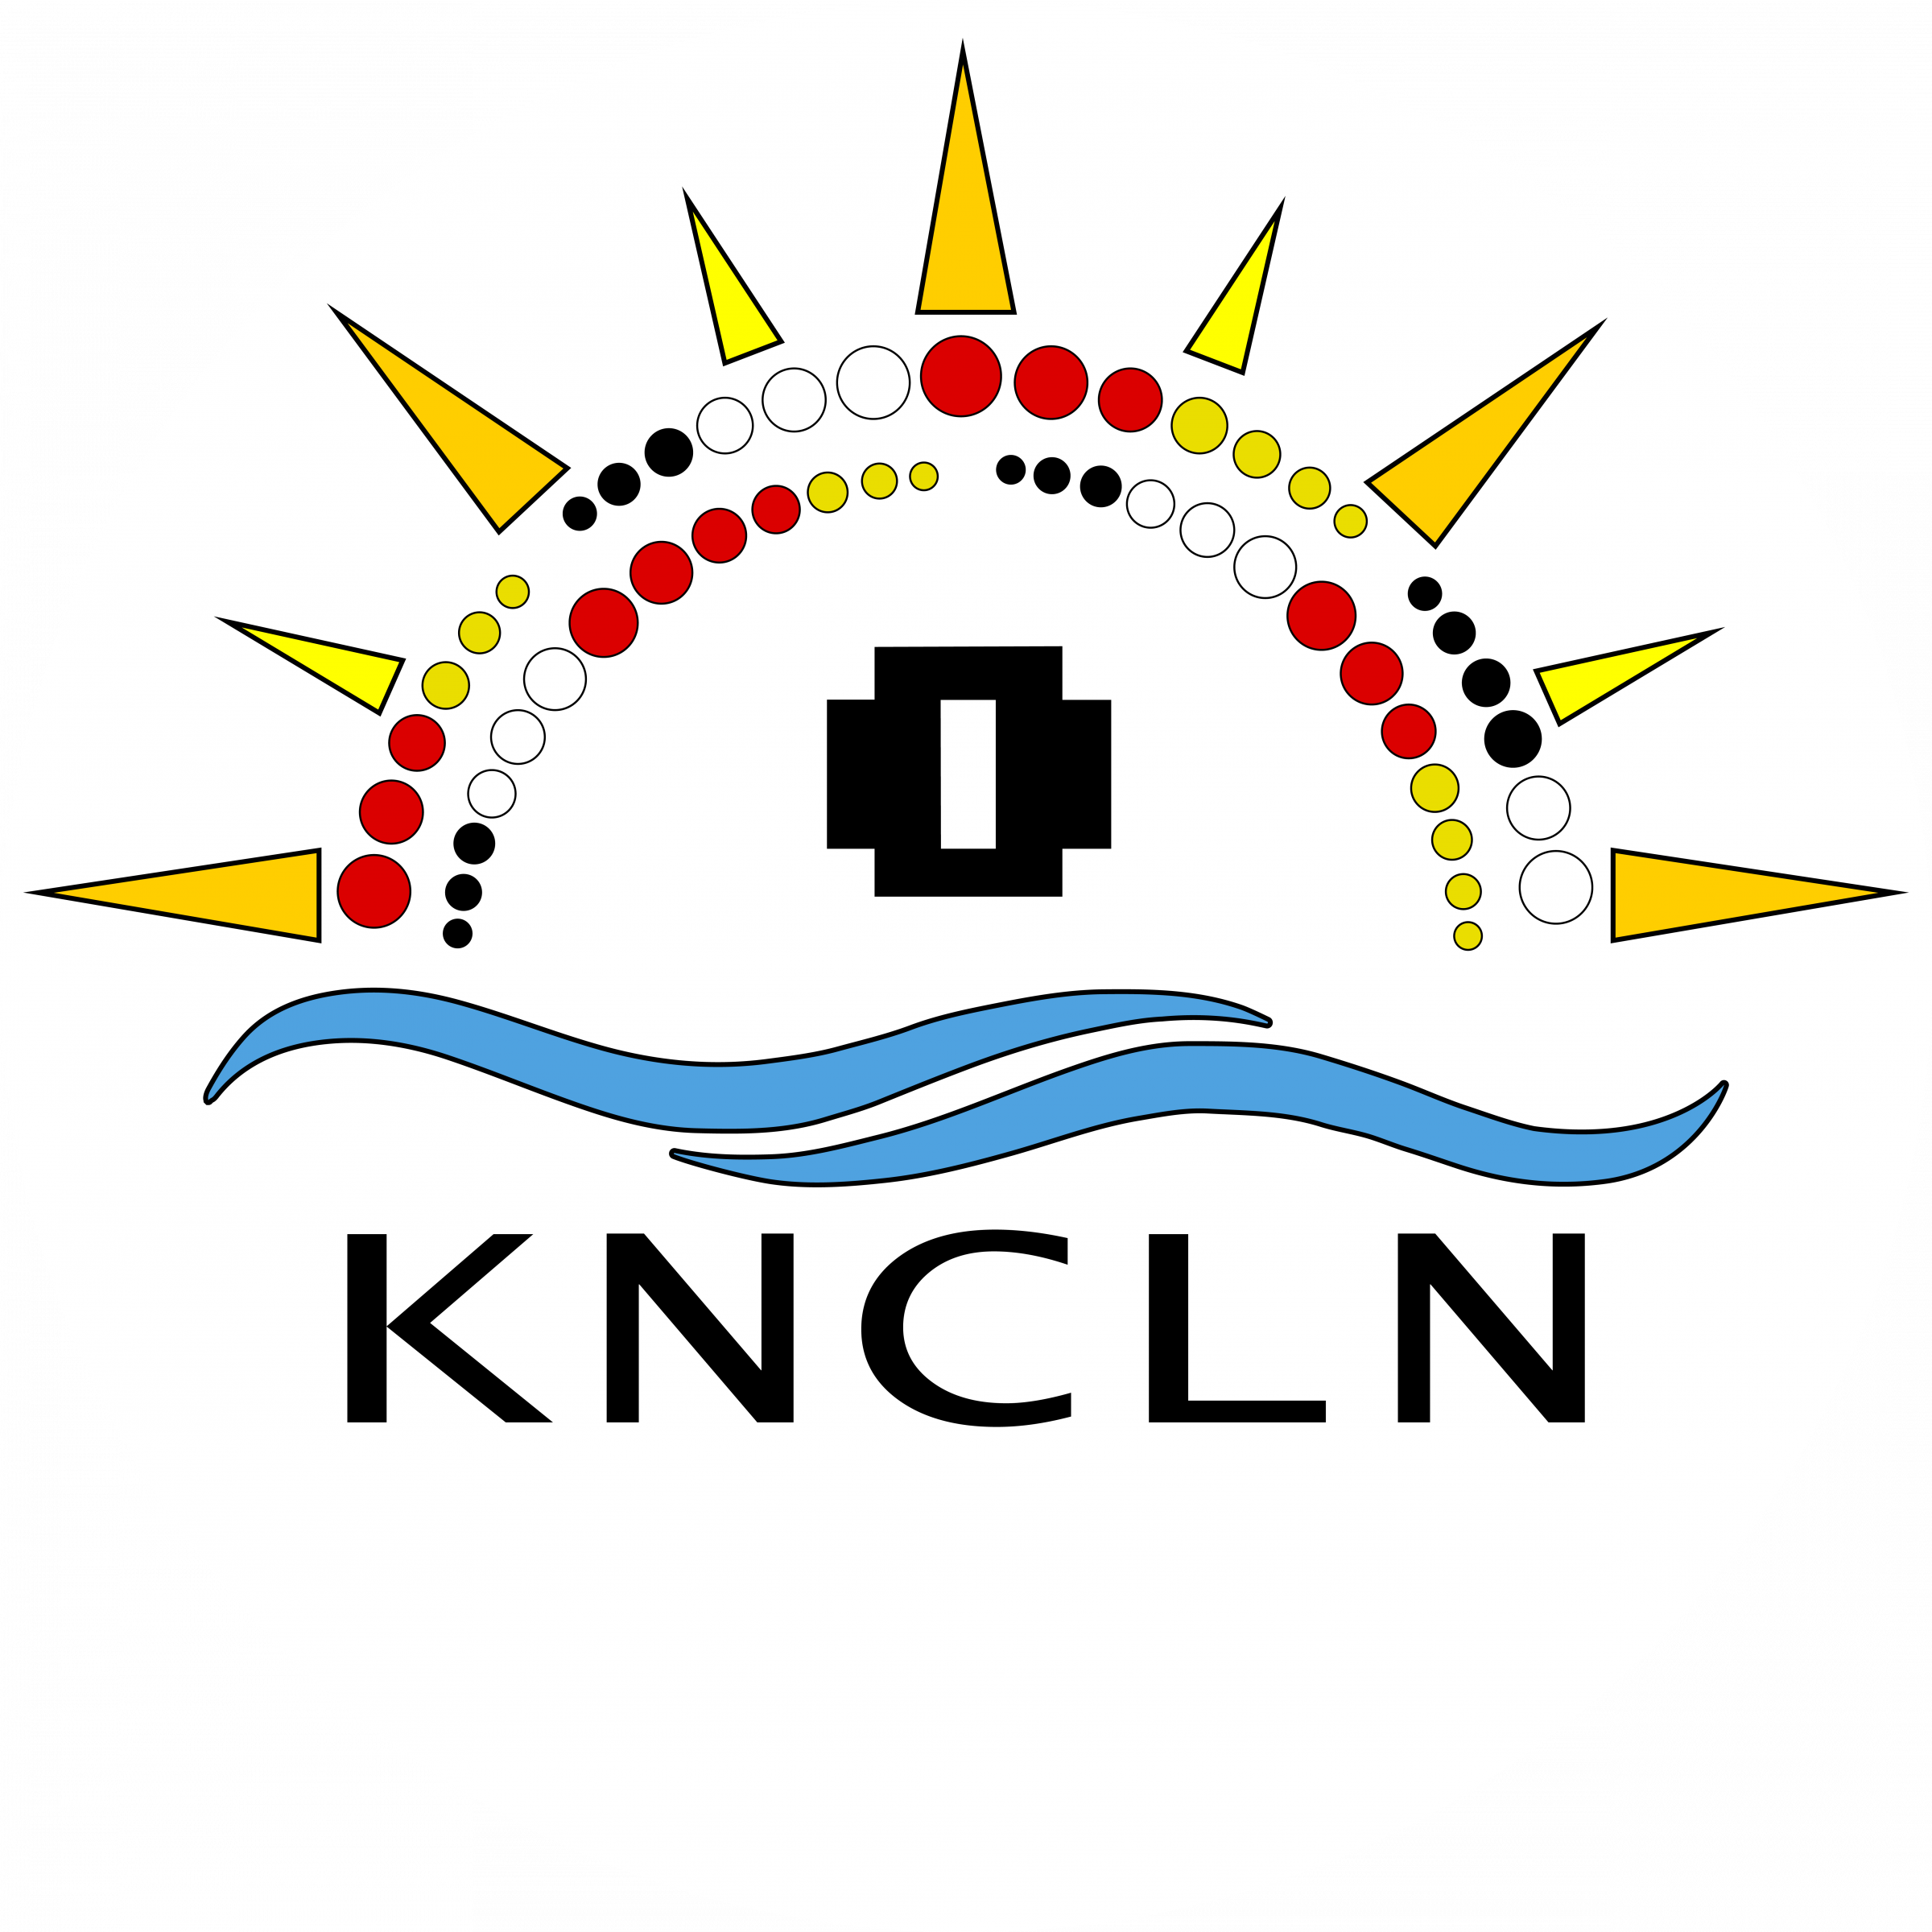 KILN's logo: https://kingstonindigenouslanguage.ca/